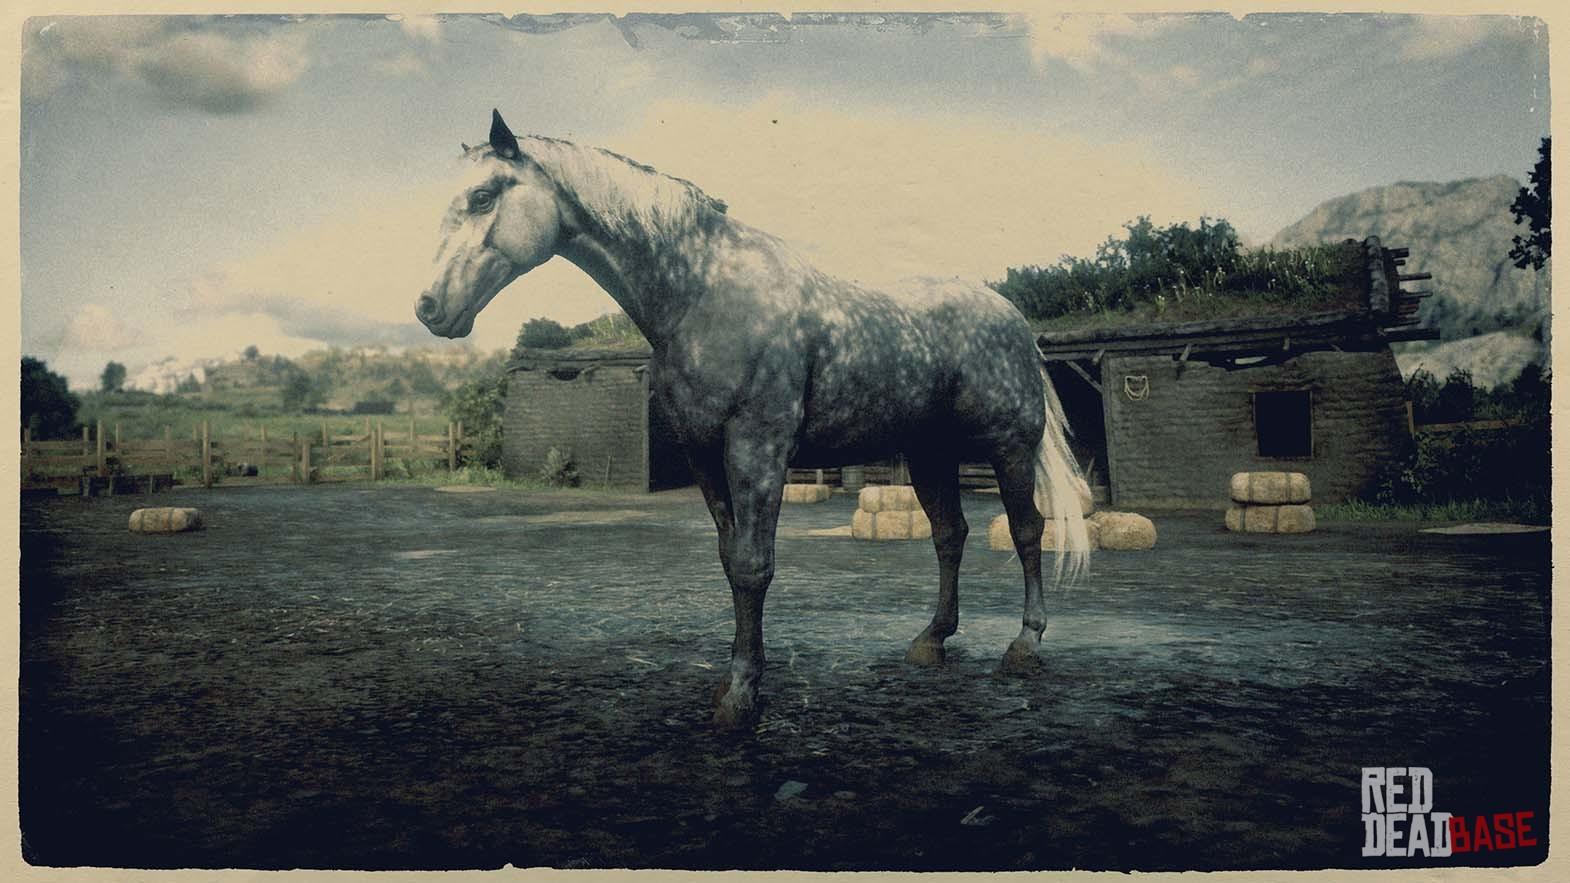 dark dapple grey horse